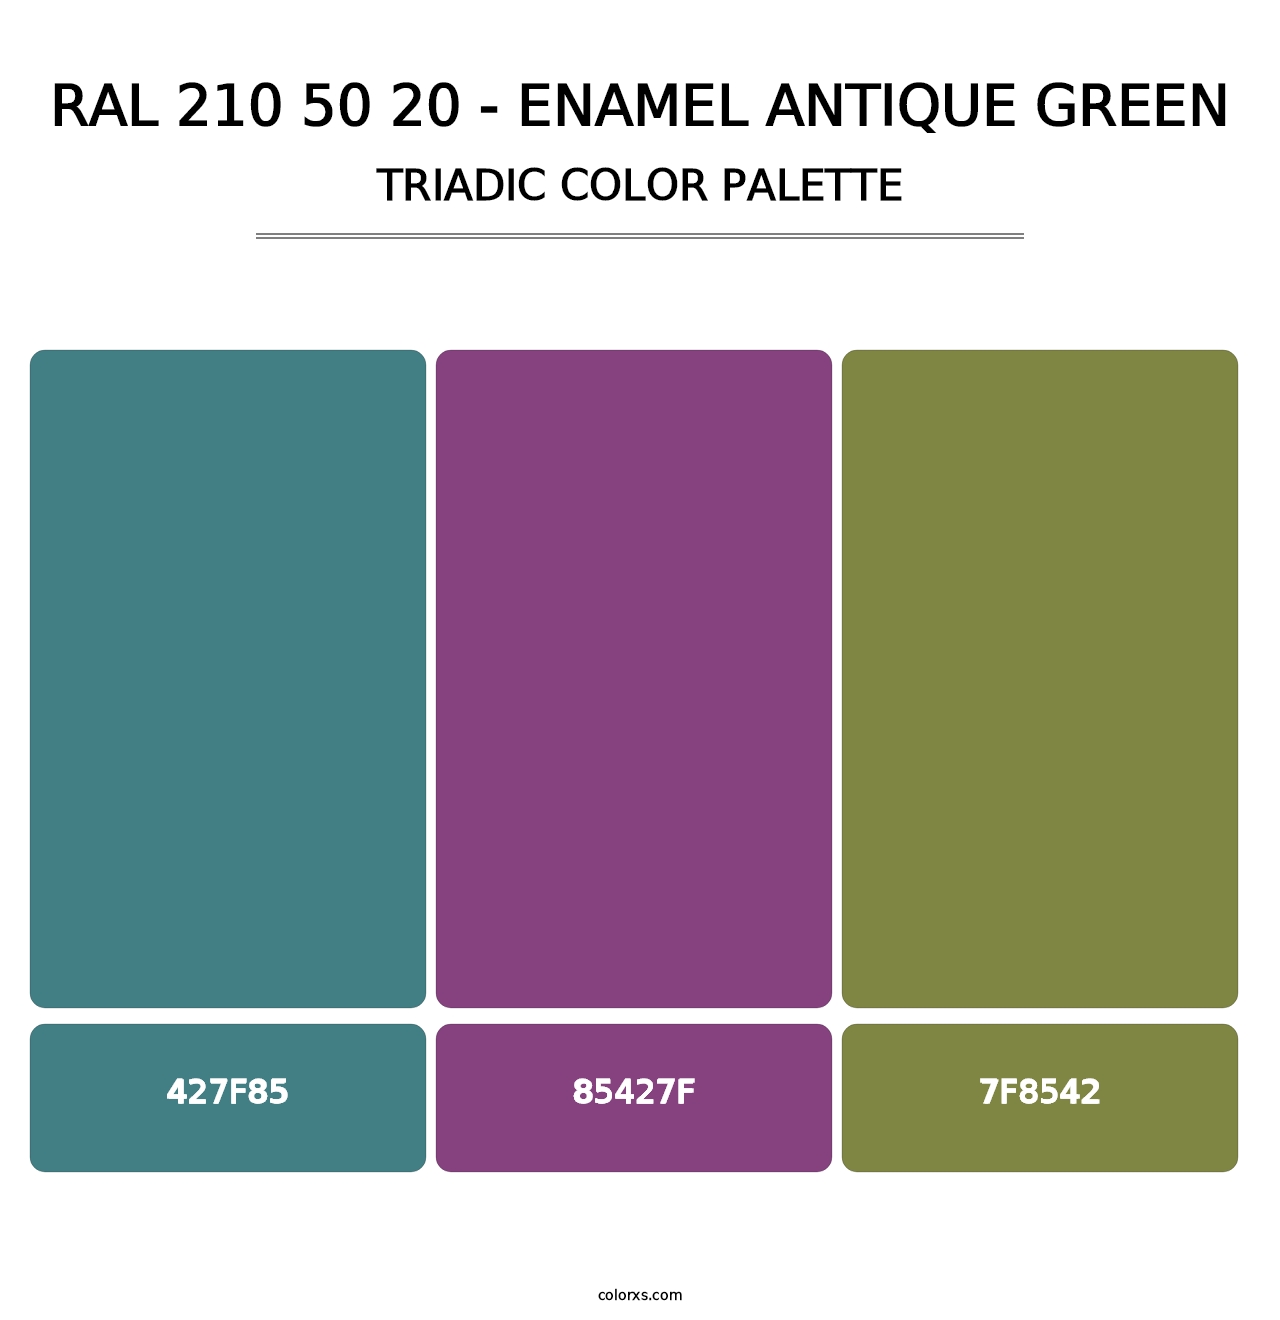 RAL 210 50 20 - Enamel Antique Green - Triadic Color Palette